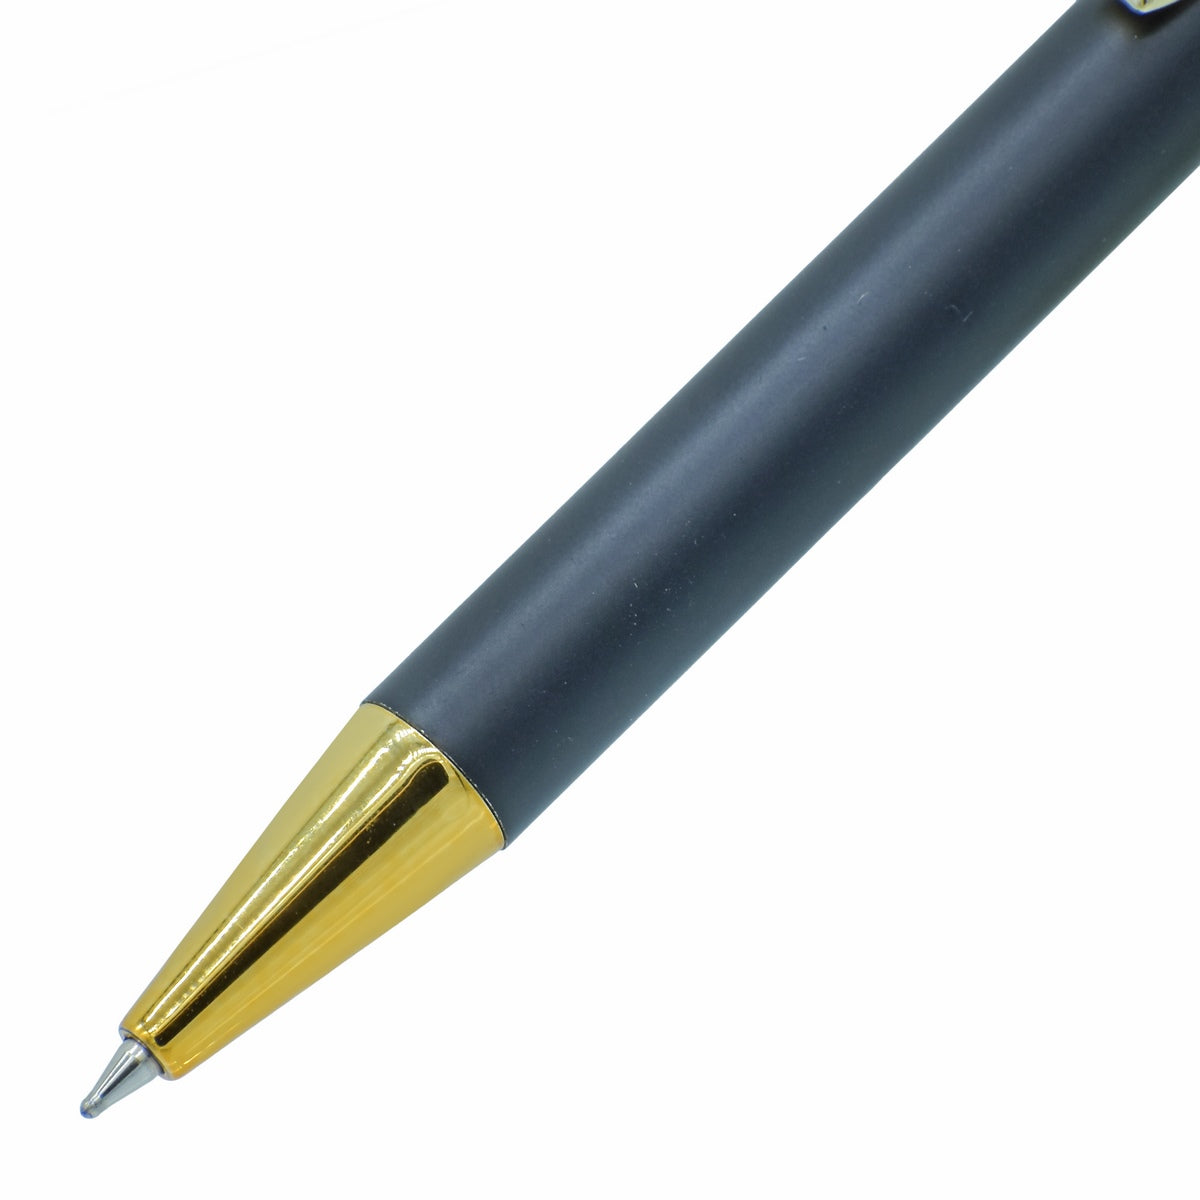 Matte Gold & Black Color Ball Pen - For Office, College, Personal Use - Bikaner